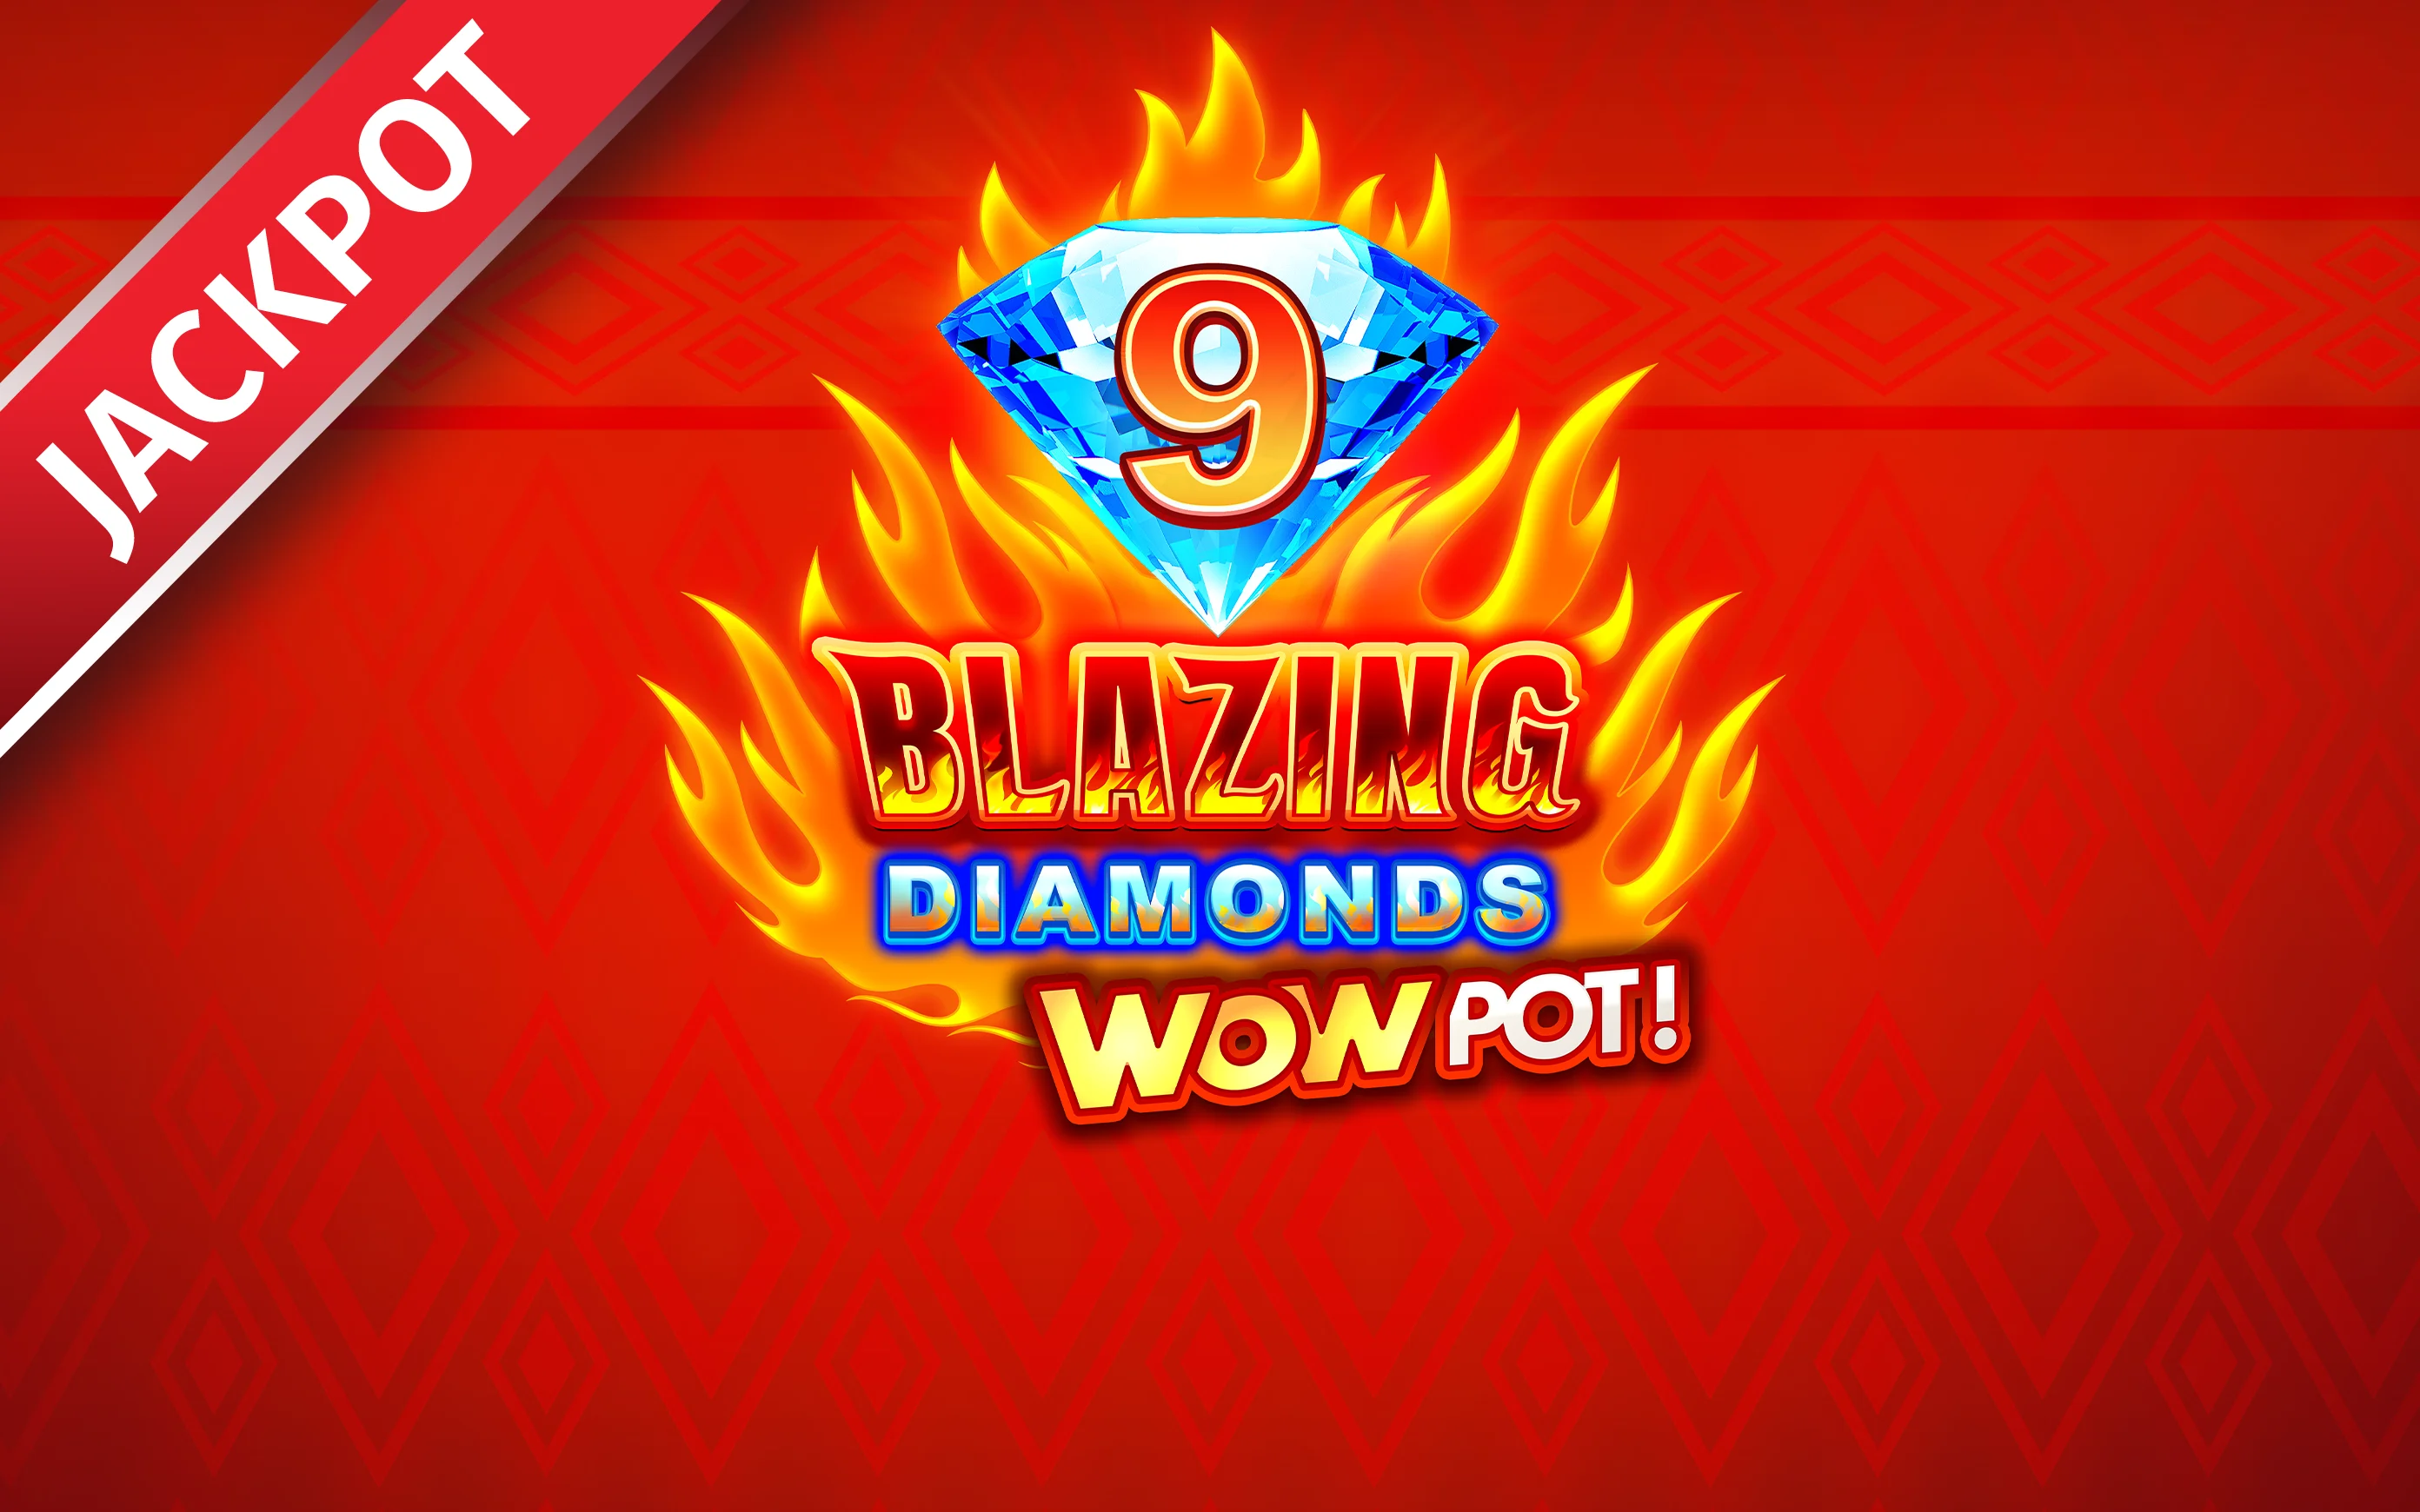 Chơi 9 Blazing Diamonds WOWPOT trên sòng bạc trực tuyến Starcasino.be